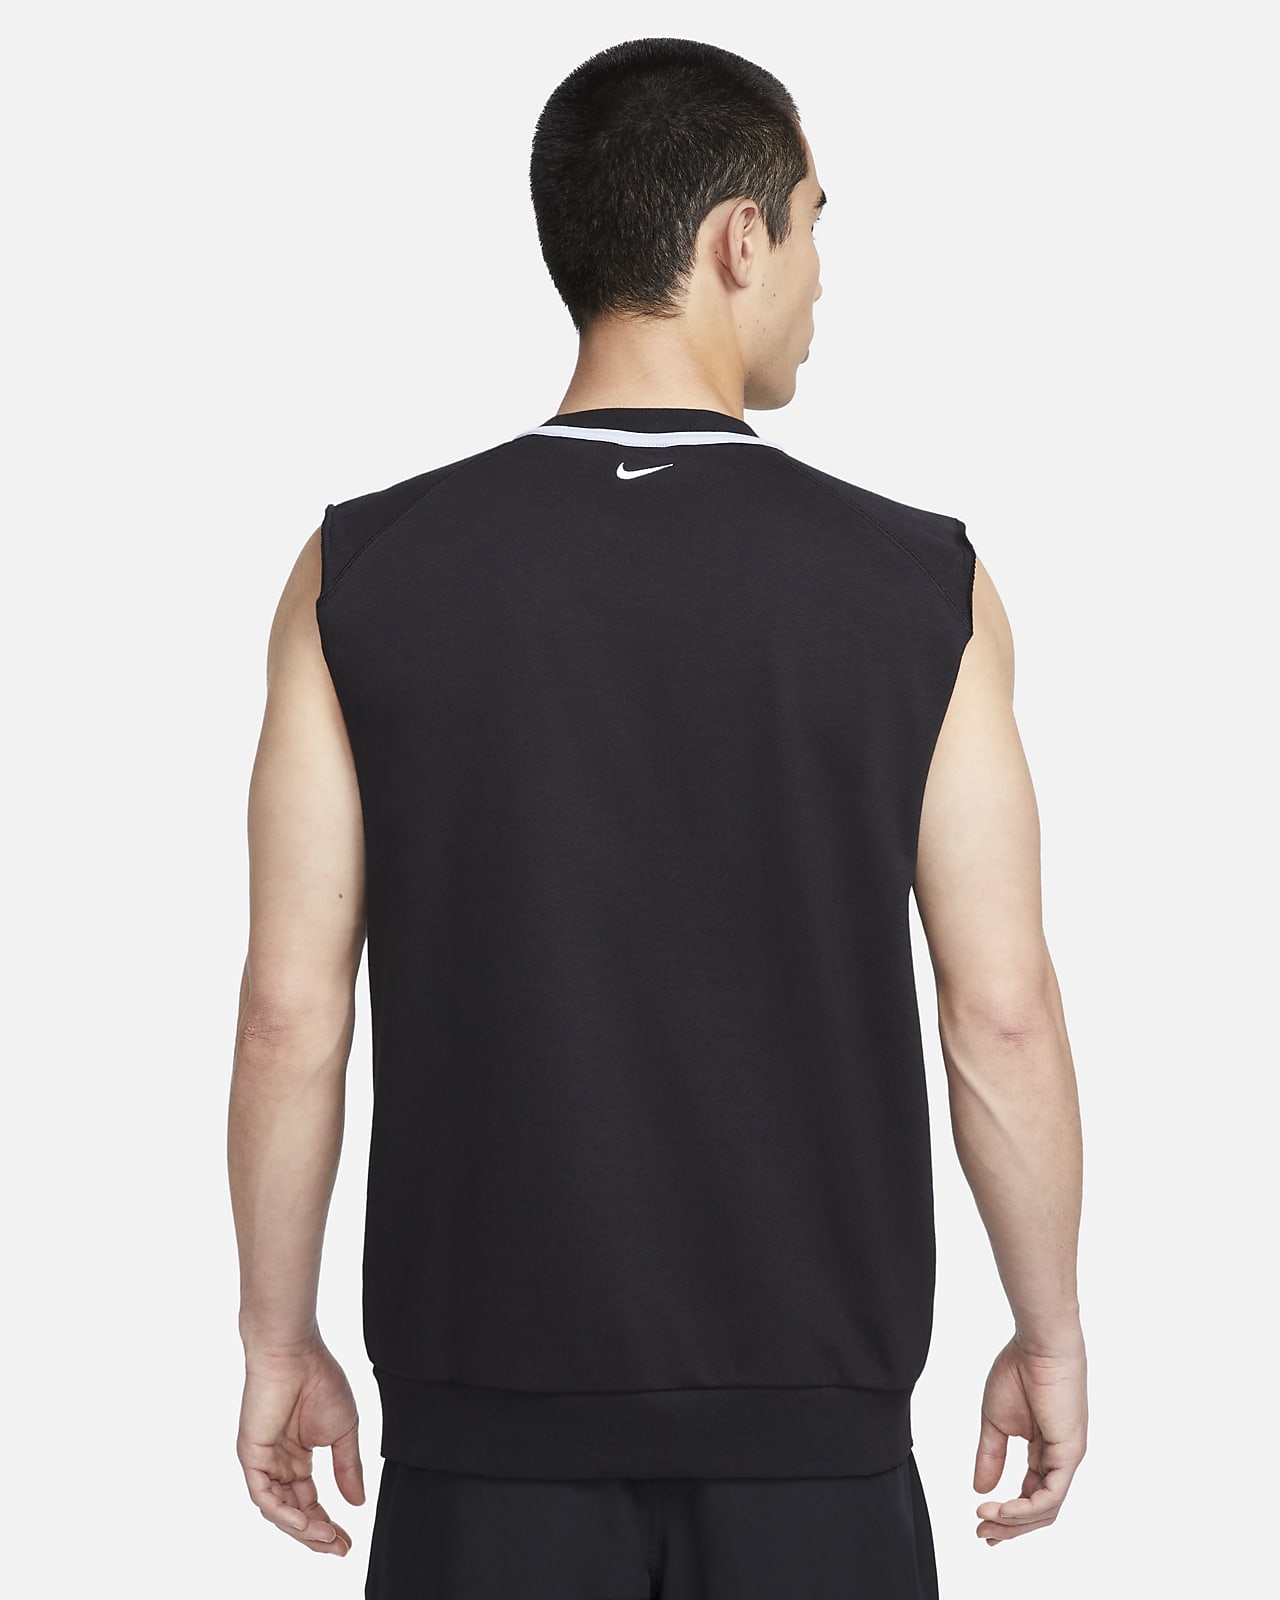 Nike Dri-FIT Men's Sleeveless Fleece Fitness Top. Nike LU